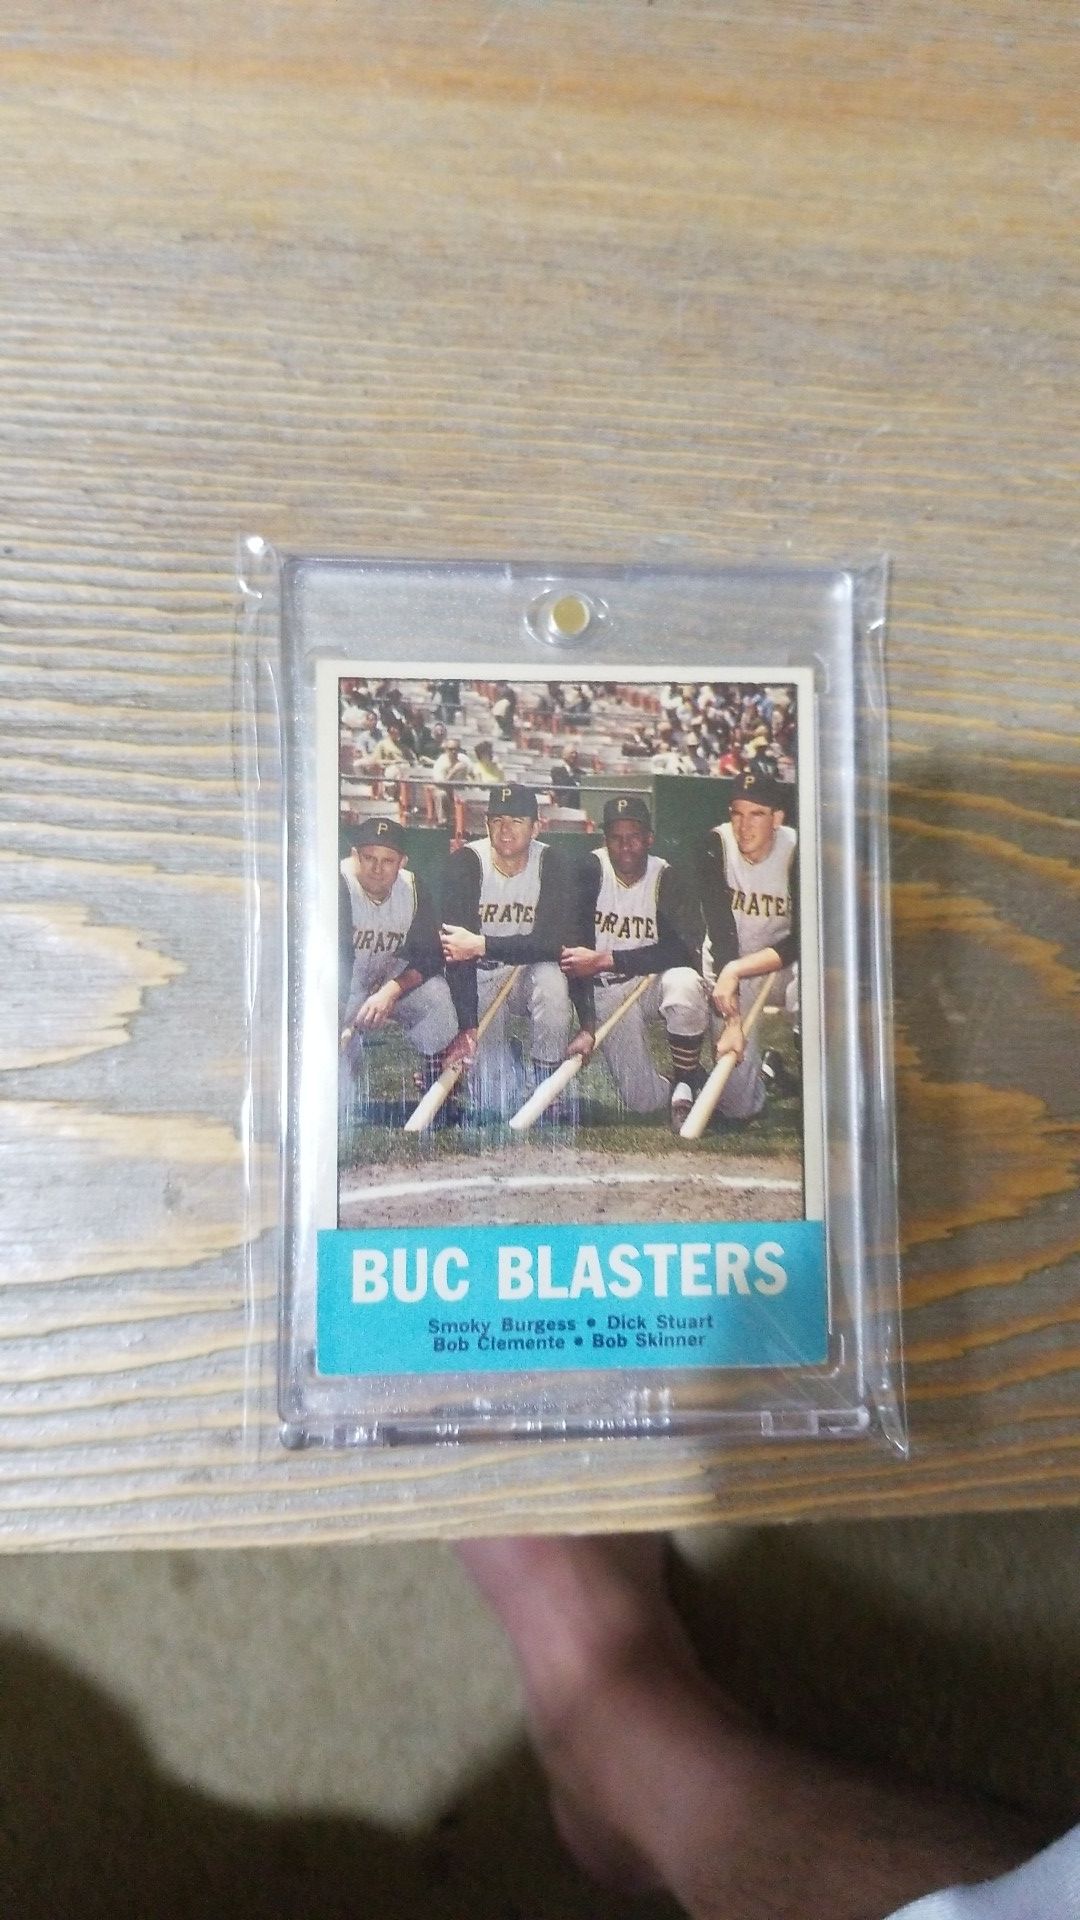 Baseball card- 1963 Roberto Clemente buc blasters